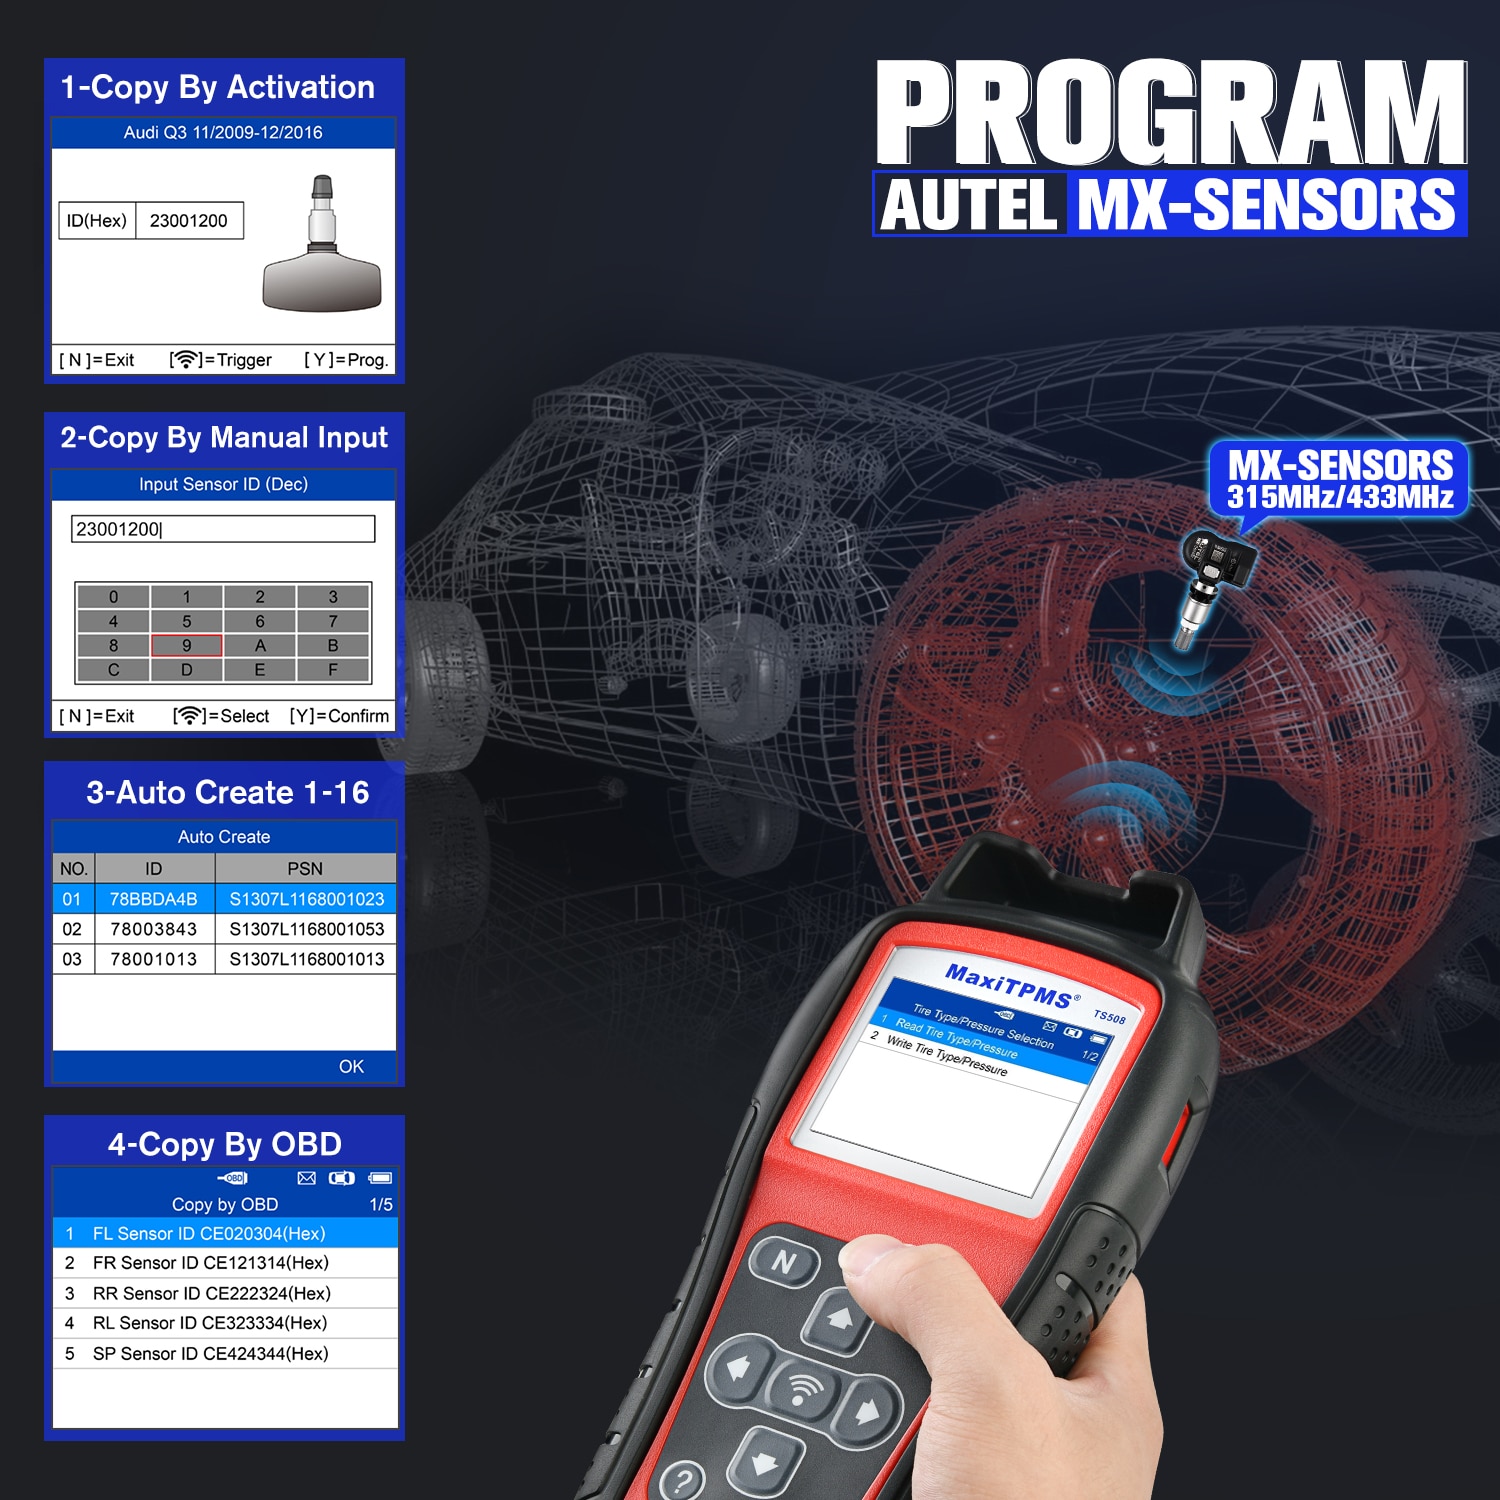 Autel MaxiTPMS TS508 TPMS Tool Sensor Progarmming/ Relearn/ Activate, TPMS Reset, Read/Clear TPMS DTCs Upgraded of TS501 TS408